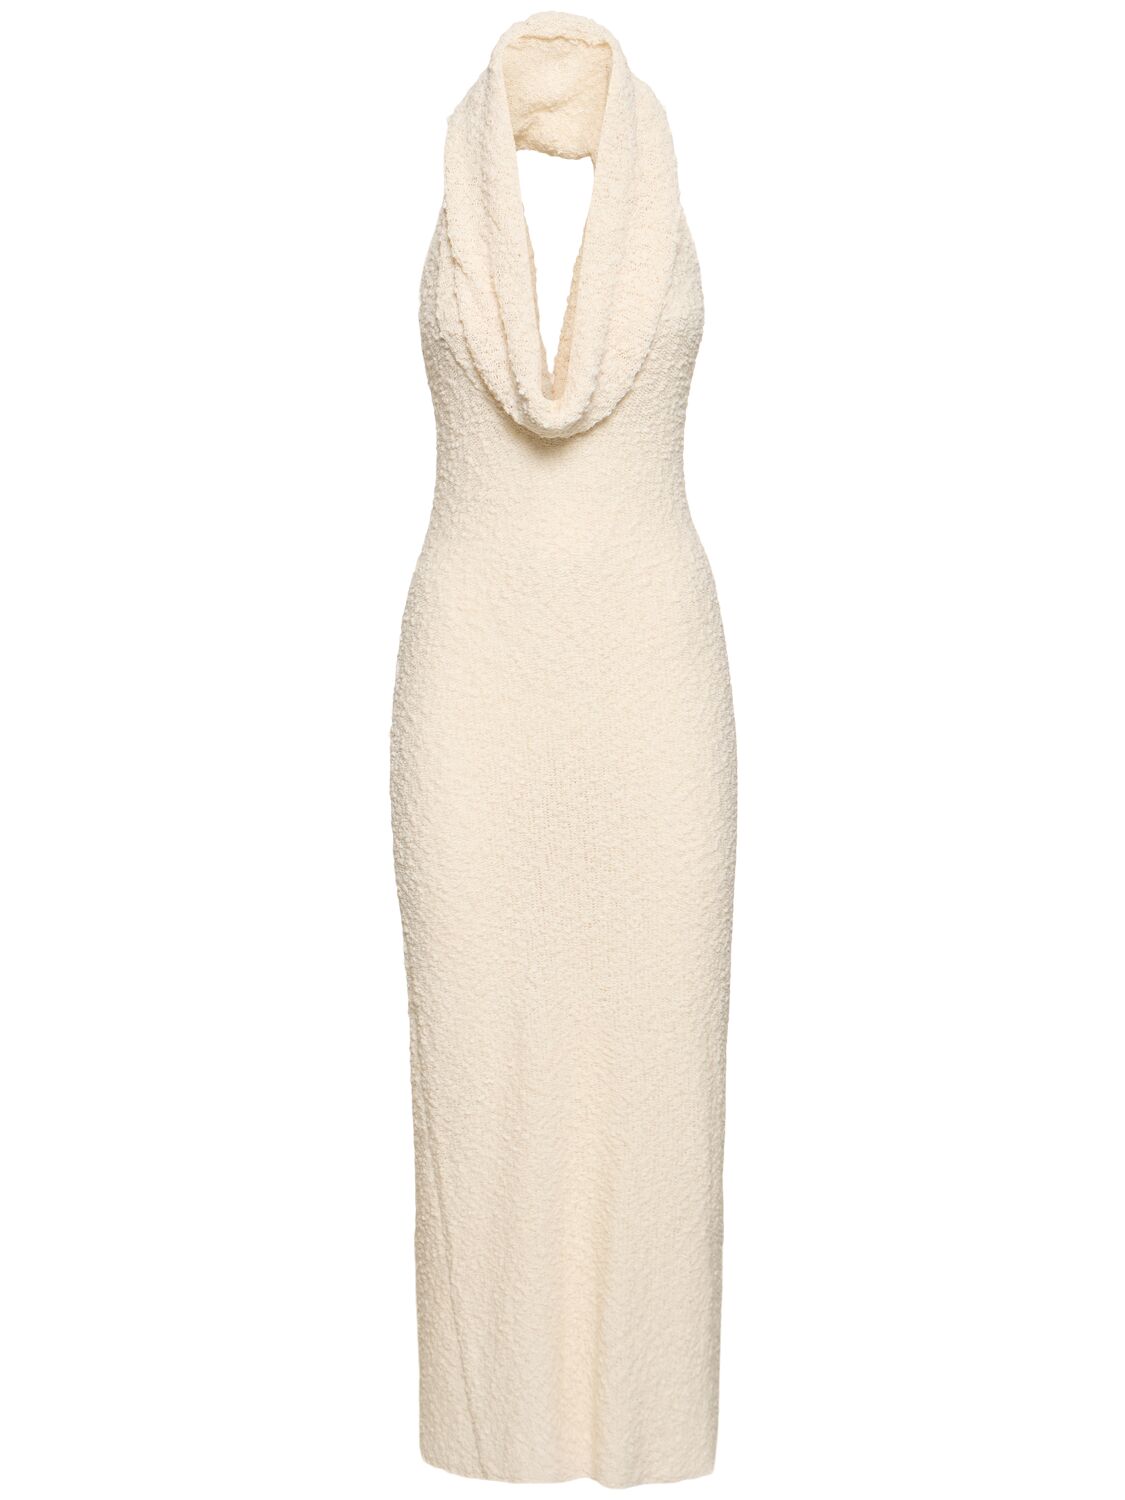 Image of Cotton Blend Knit Dress W/ Plunge Neck